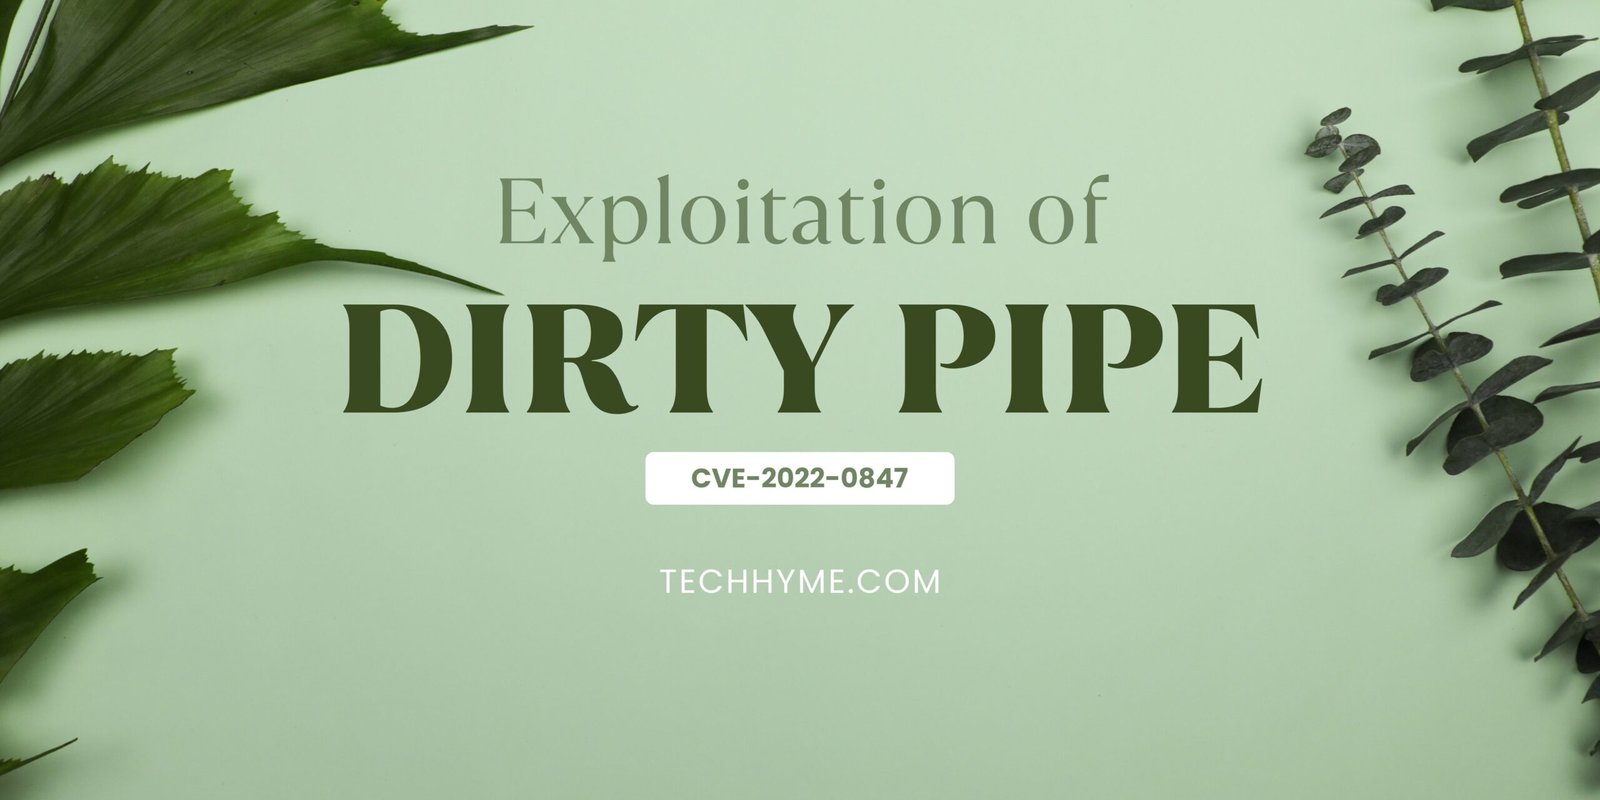 Dirty Pipe Exploitation Techhyme